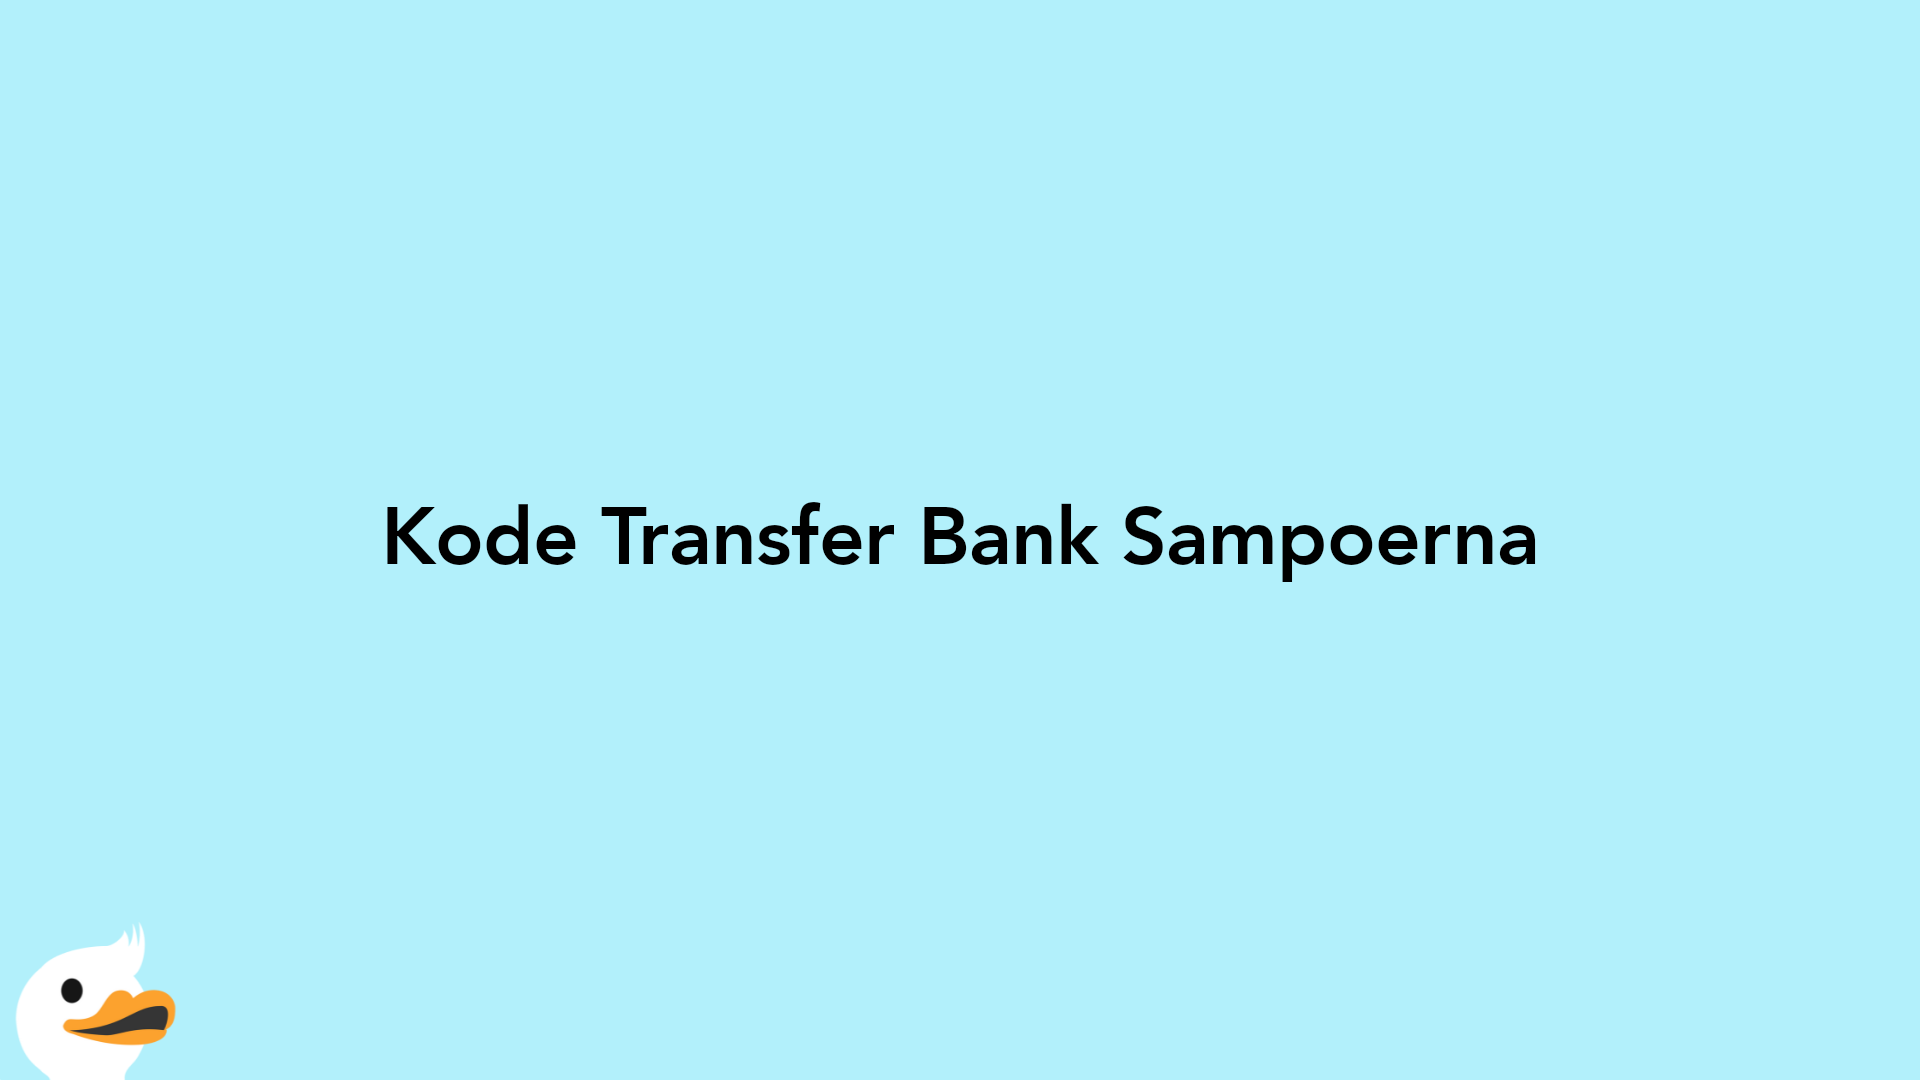 Kode Transfer Bank Sampoerna